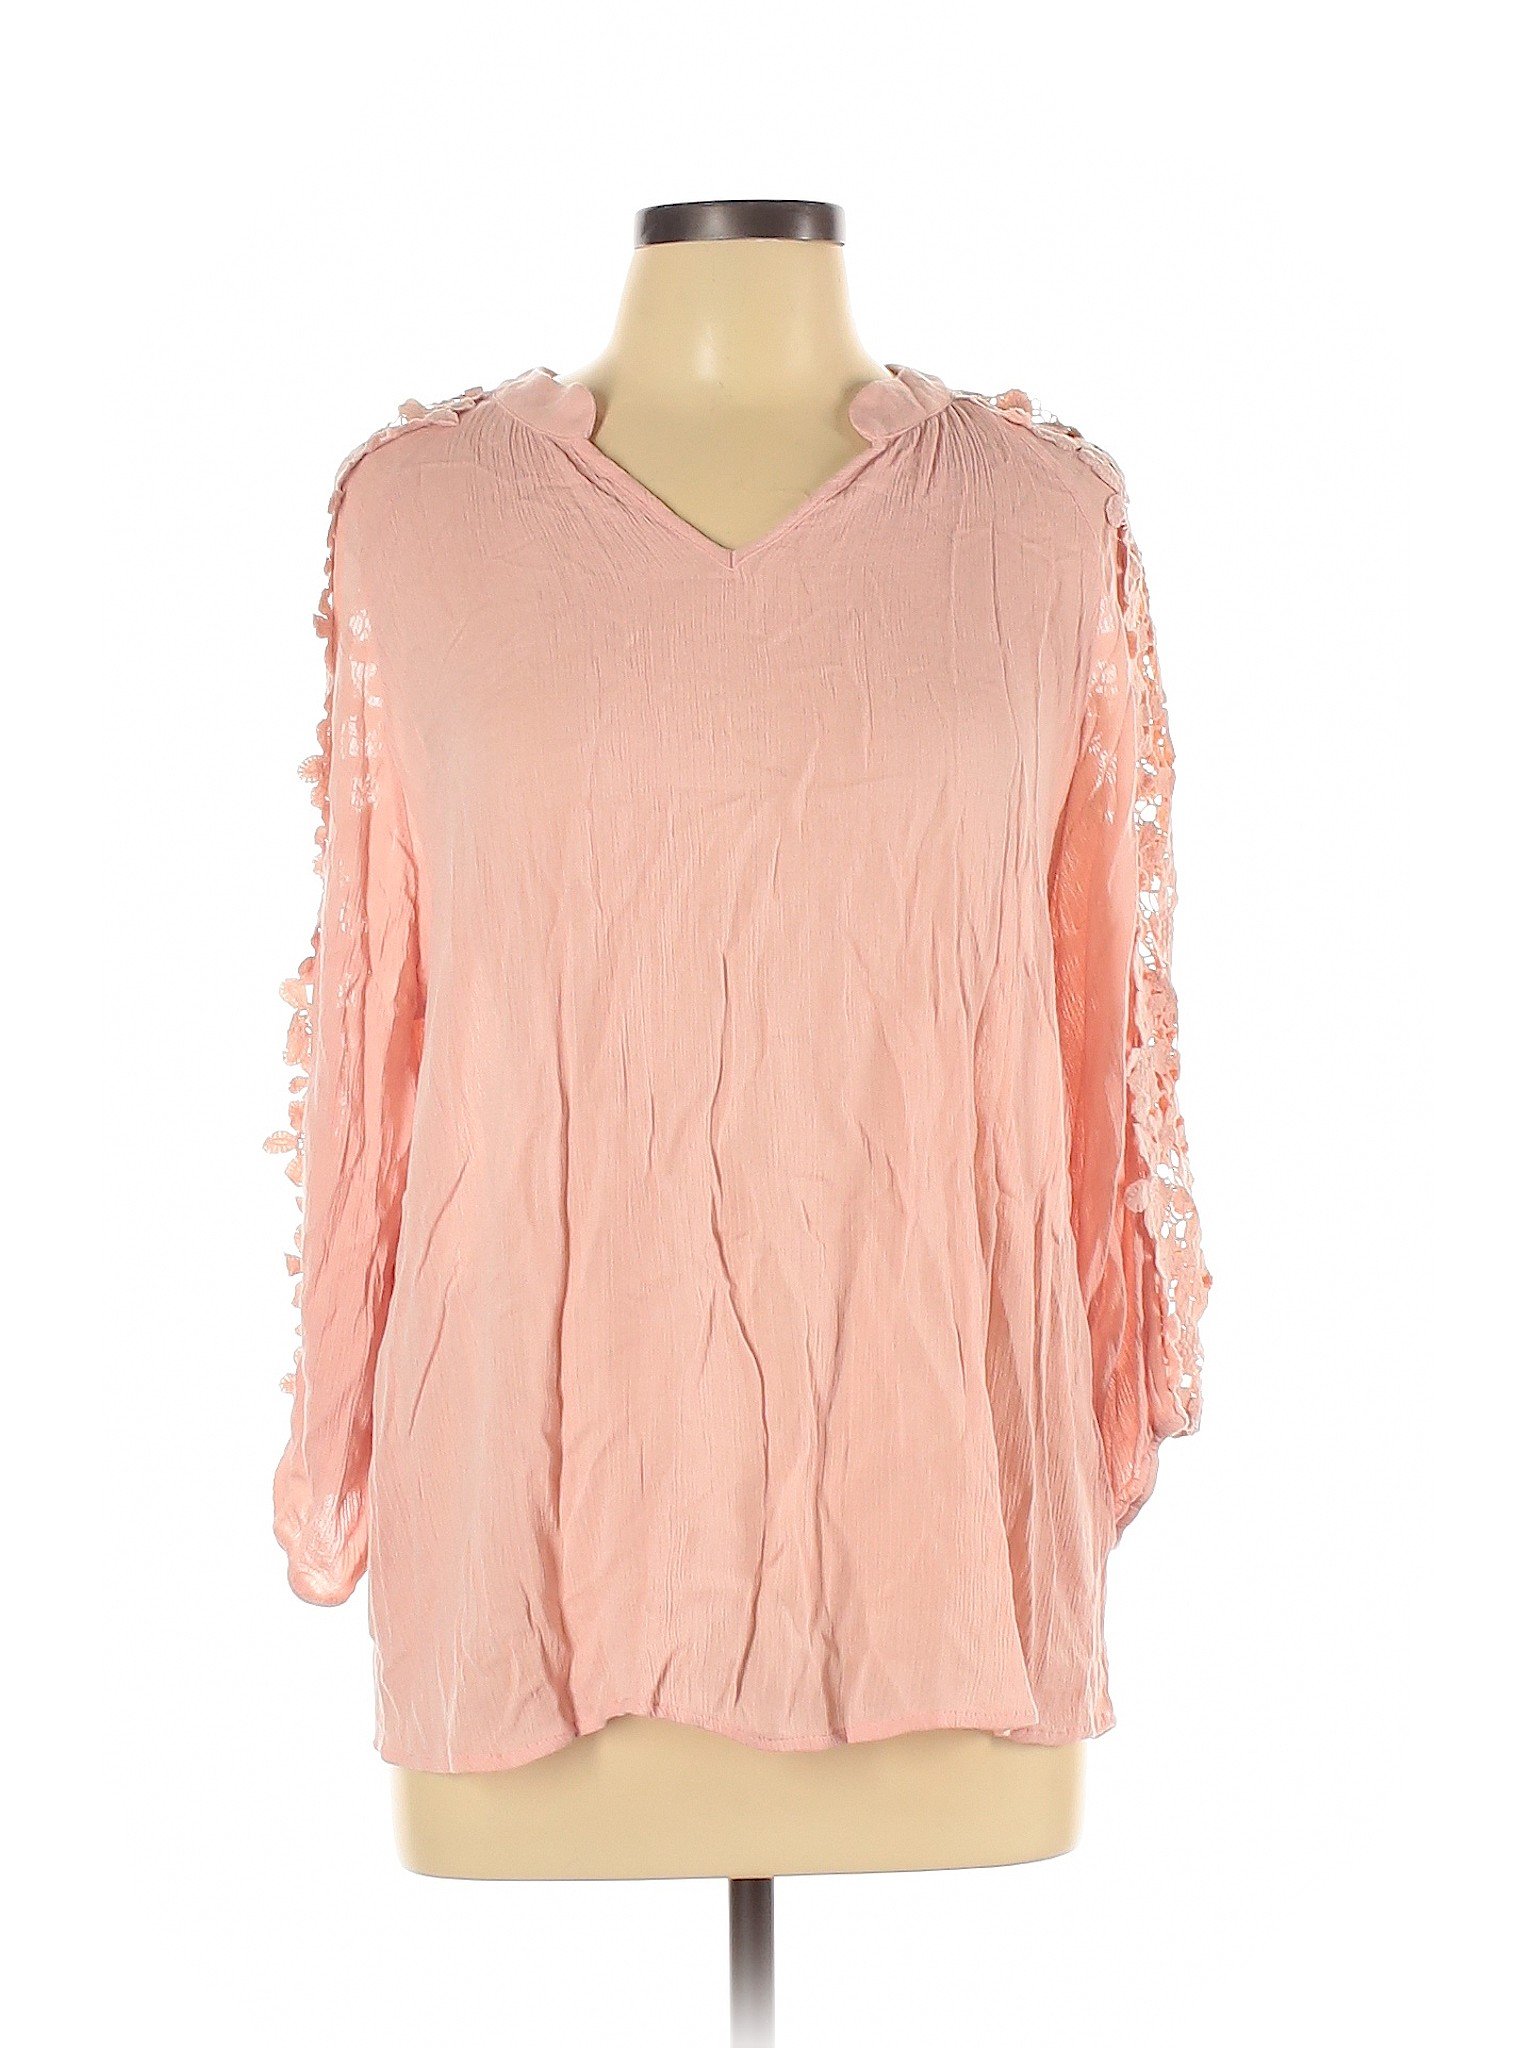 Davi & Dani Women Pink 3/4 Sleeve Blouse L | eBay